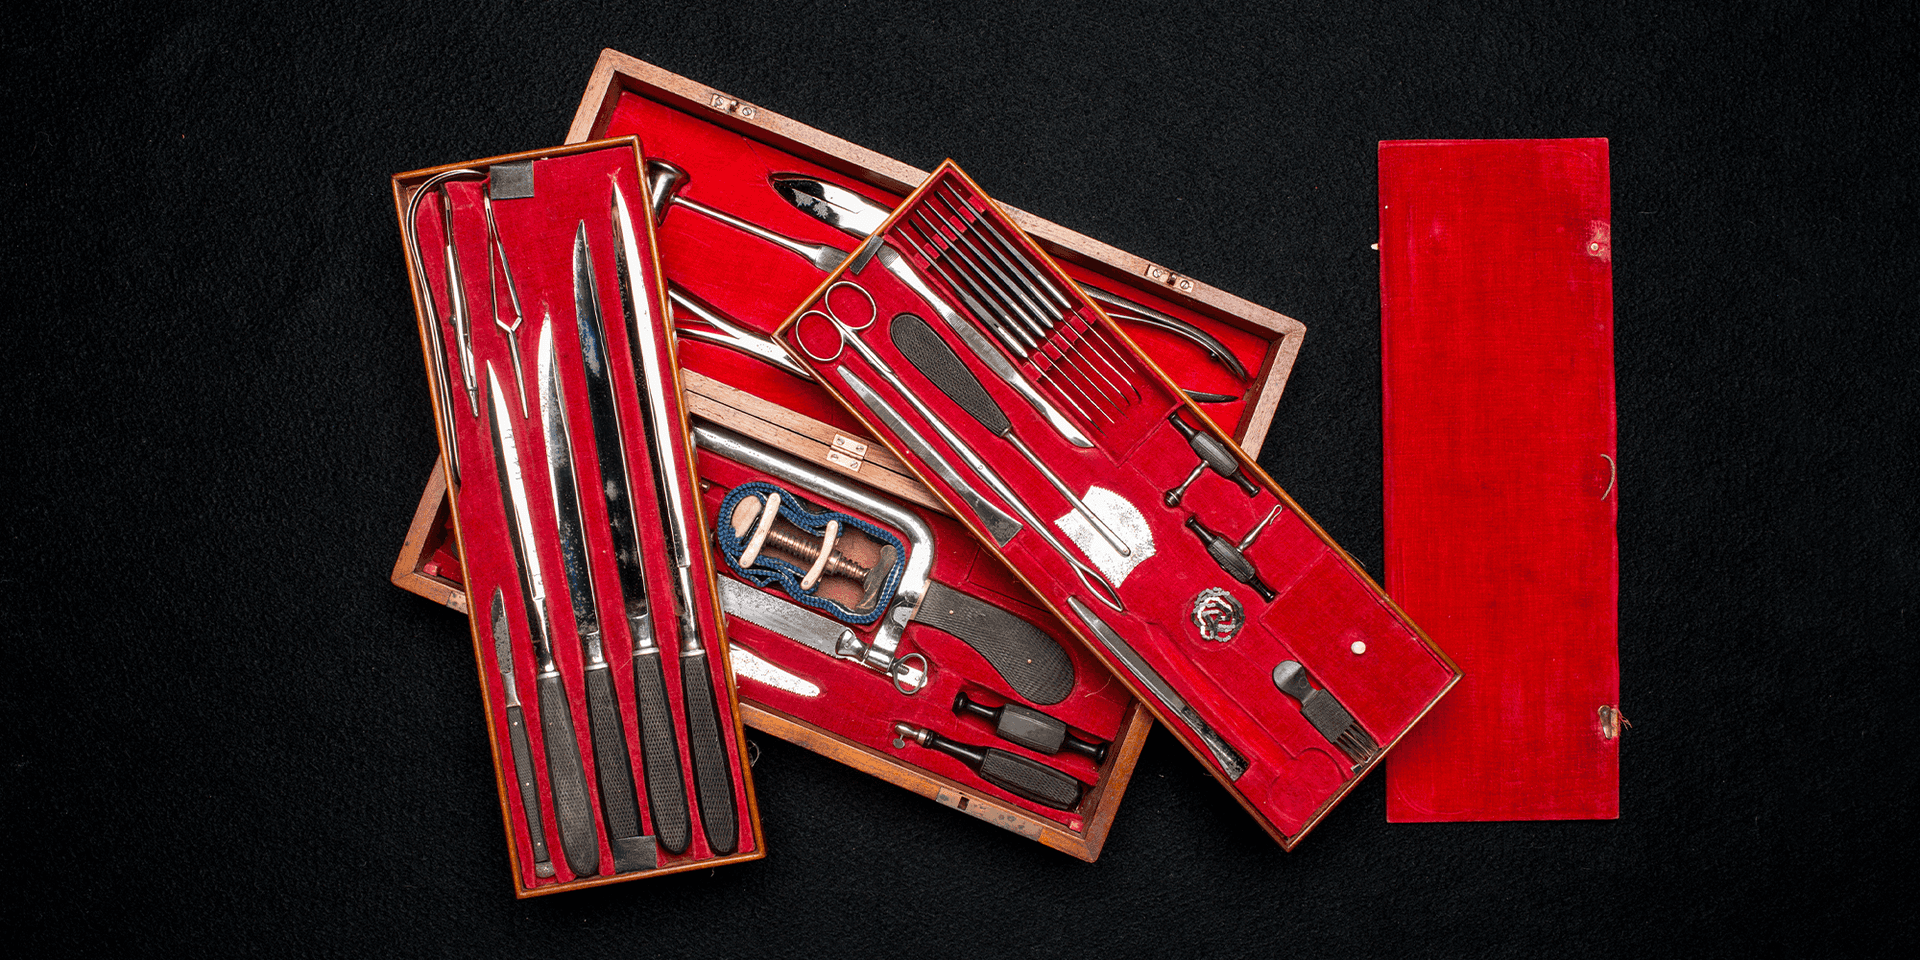 Steel instruments in red velvet-lined wood case